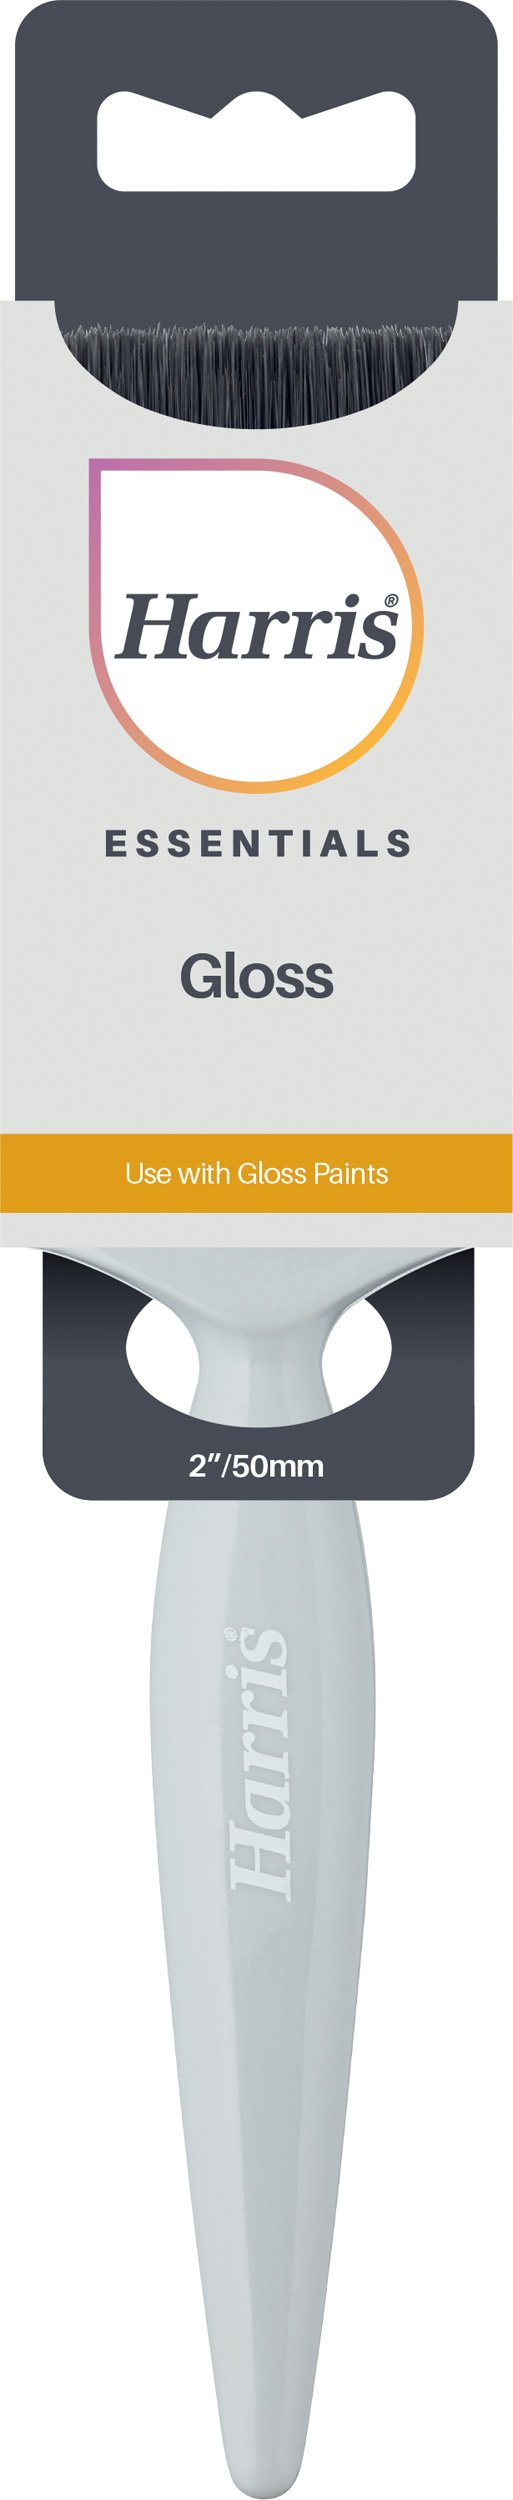 Harris-Essentials-Woodwork-Gloss-Paint-Brush-2in